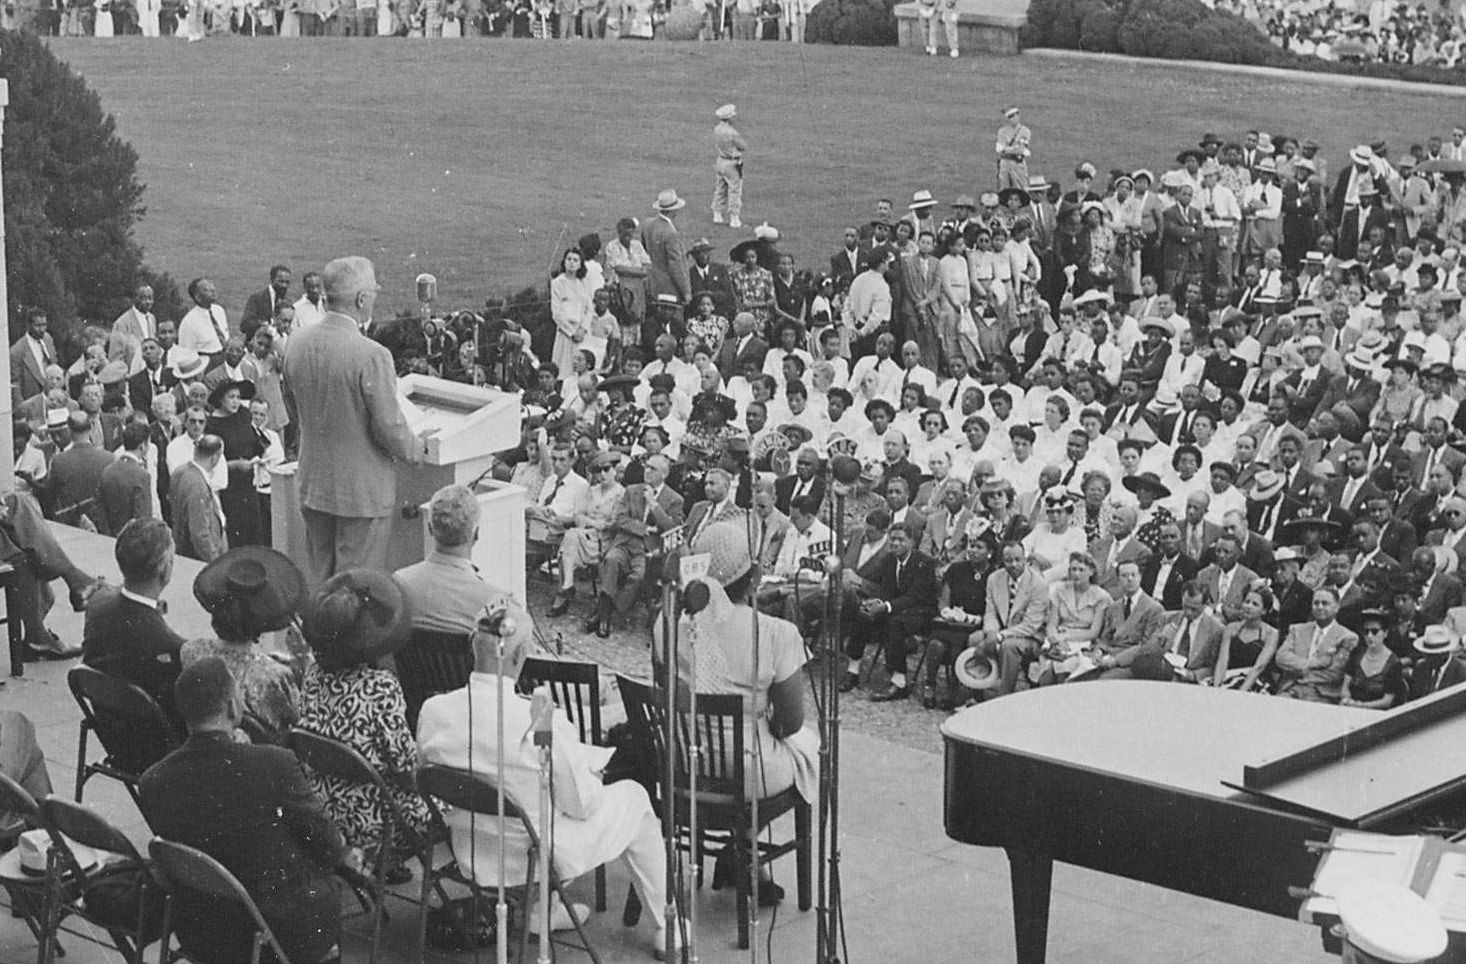 Truman Speaking at the Lincoln Memorial